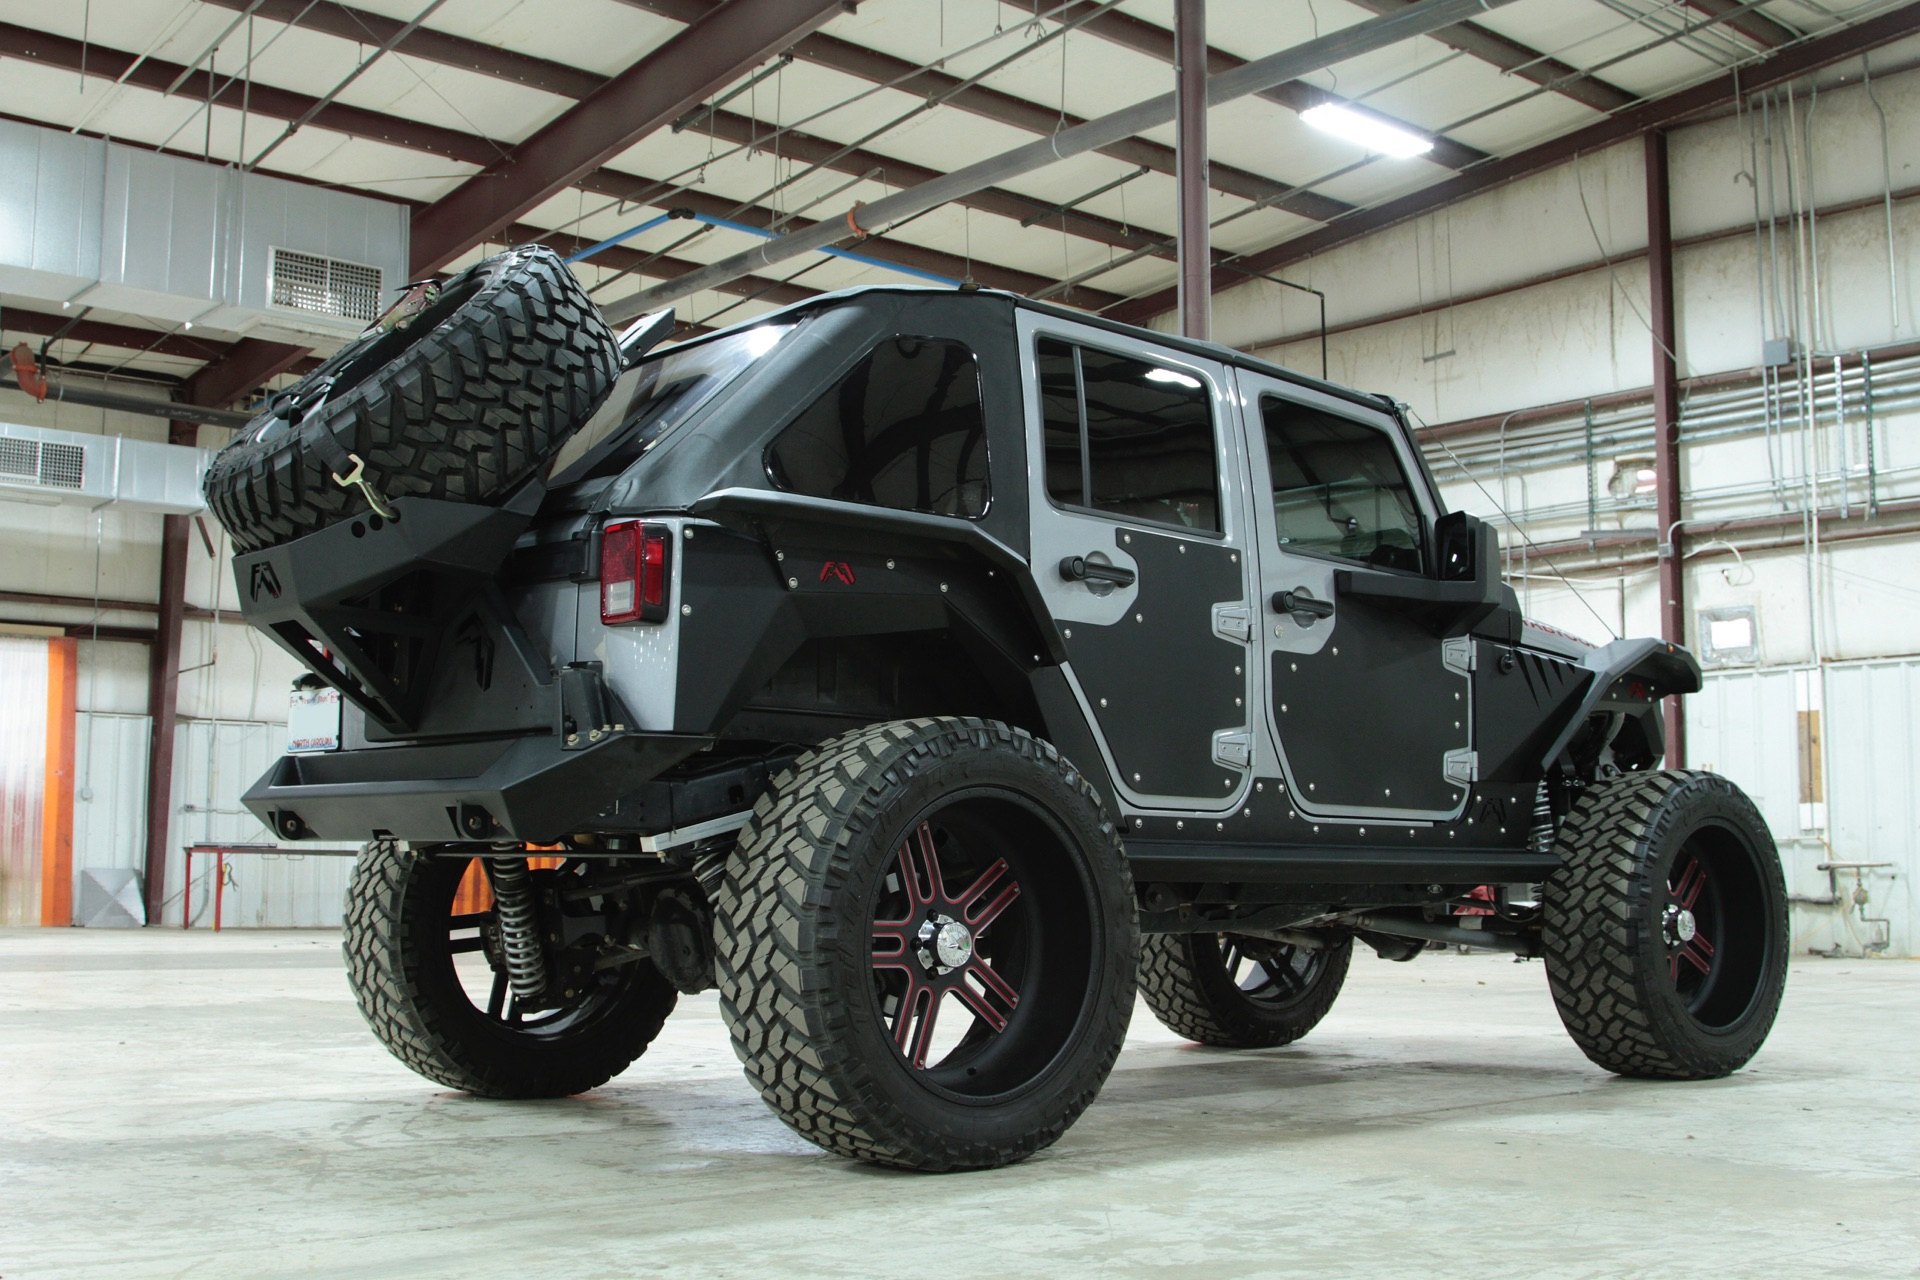 JK wrangler on 35» tires with 8 inch lift - Photo by Jason Bukolt (LFTD & LVLD Magazine)